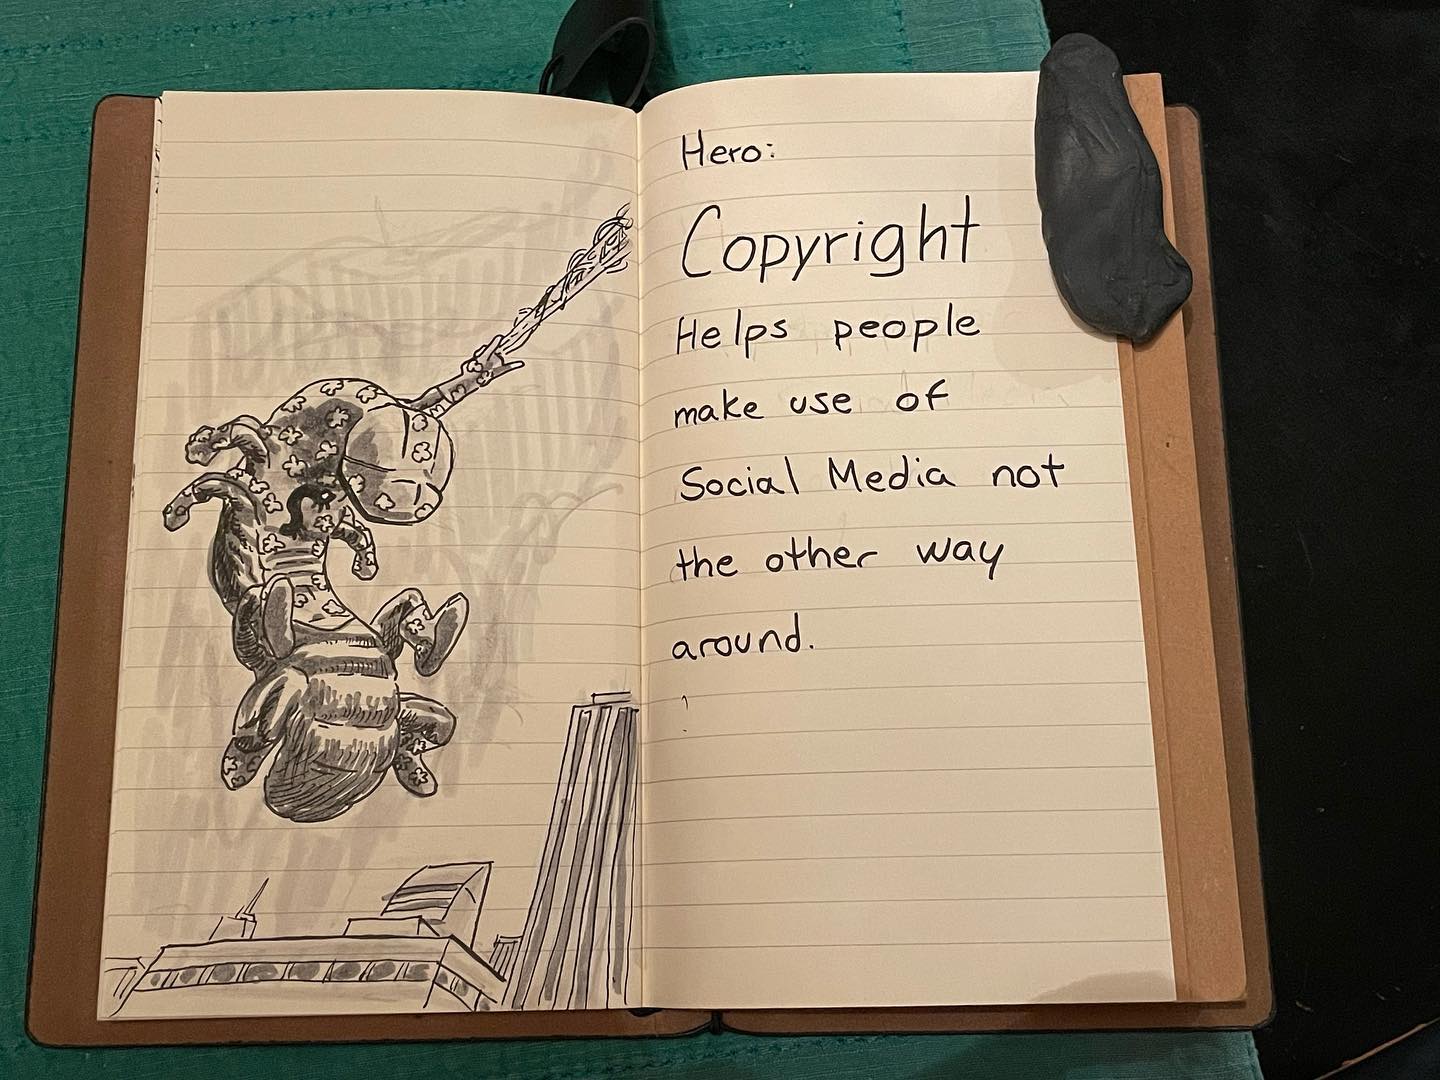 Hero: Copyright